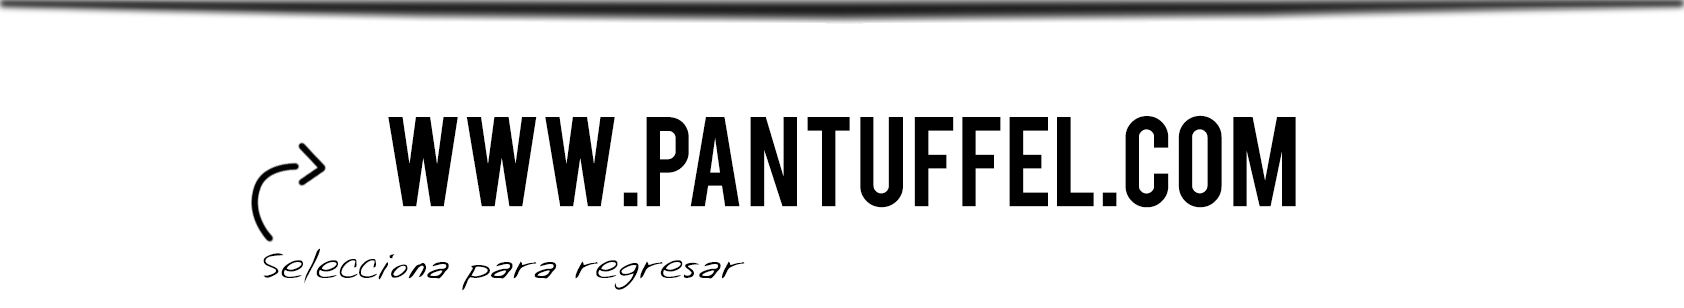 catalogo pantuffel fabrica de pantuflas impresas